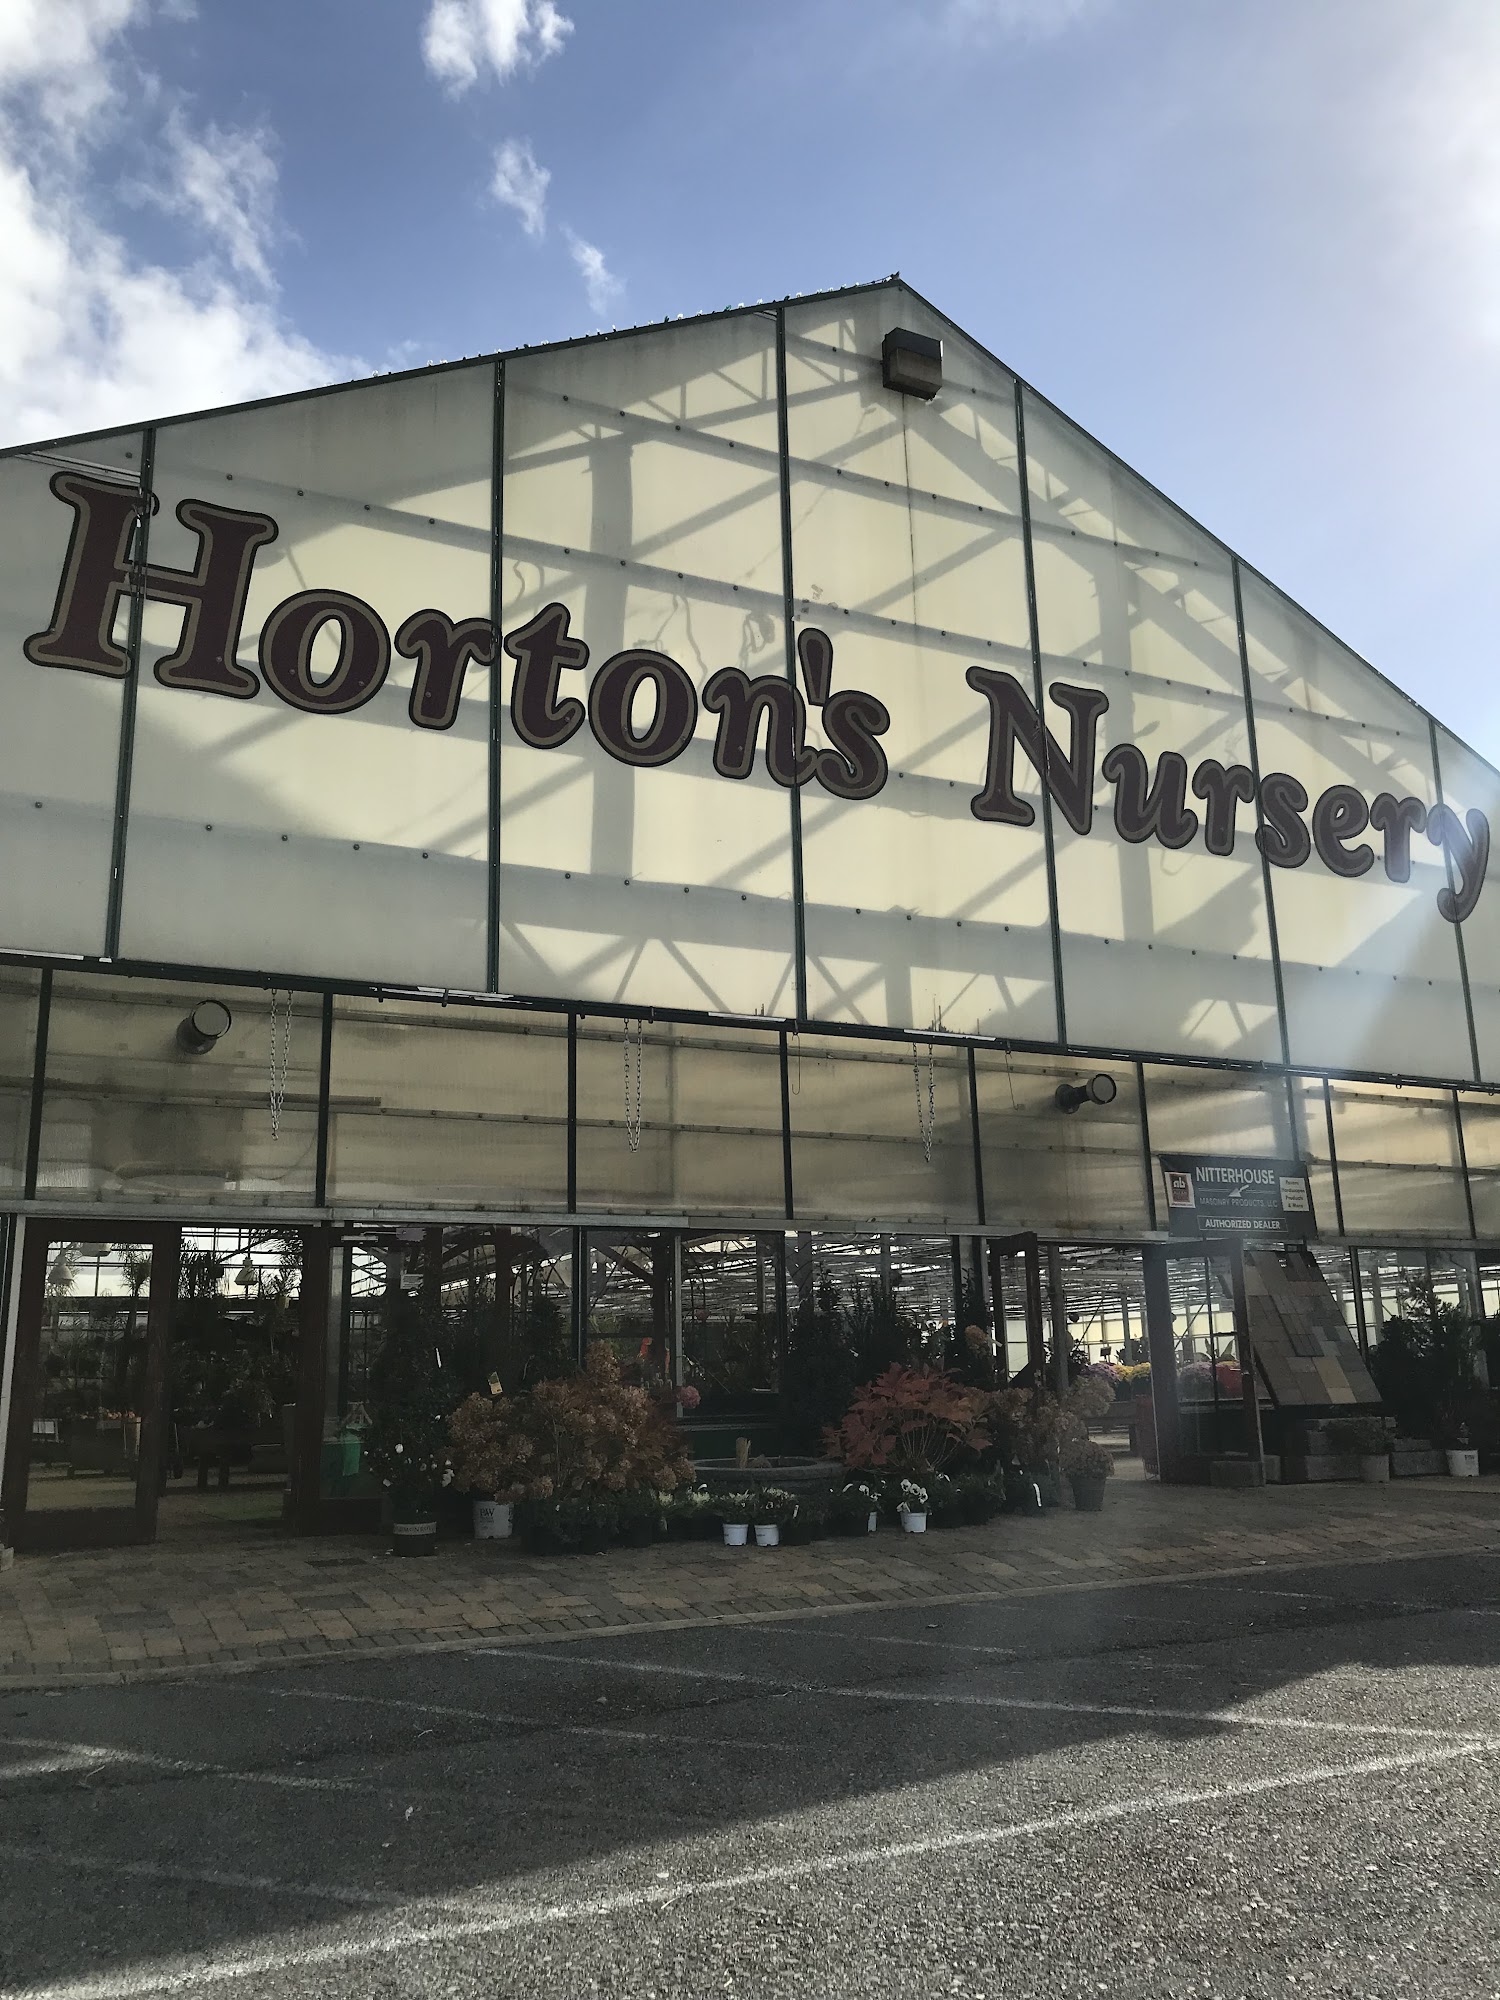 Horton's Nursery LLC